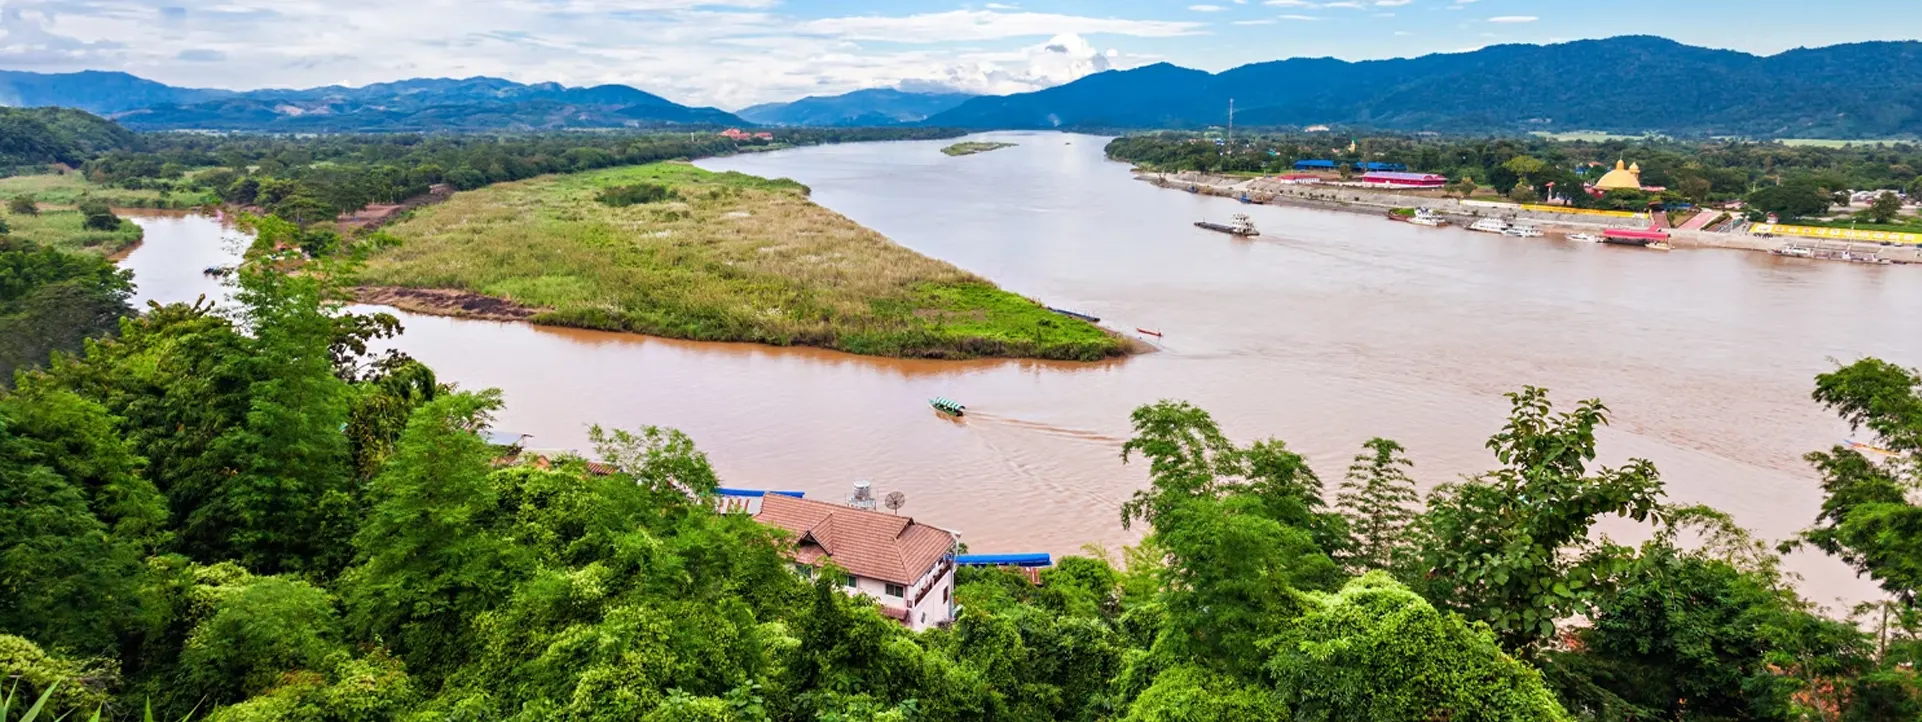 GOLDEN-TRIANGLE-THAILAND-Mekong-River